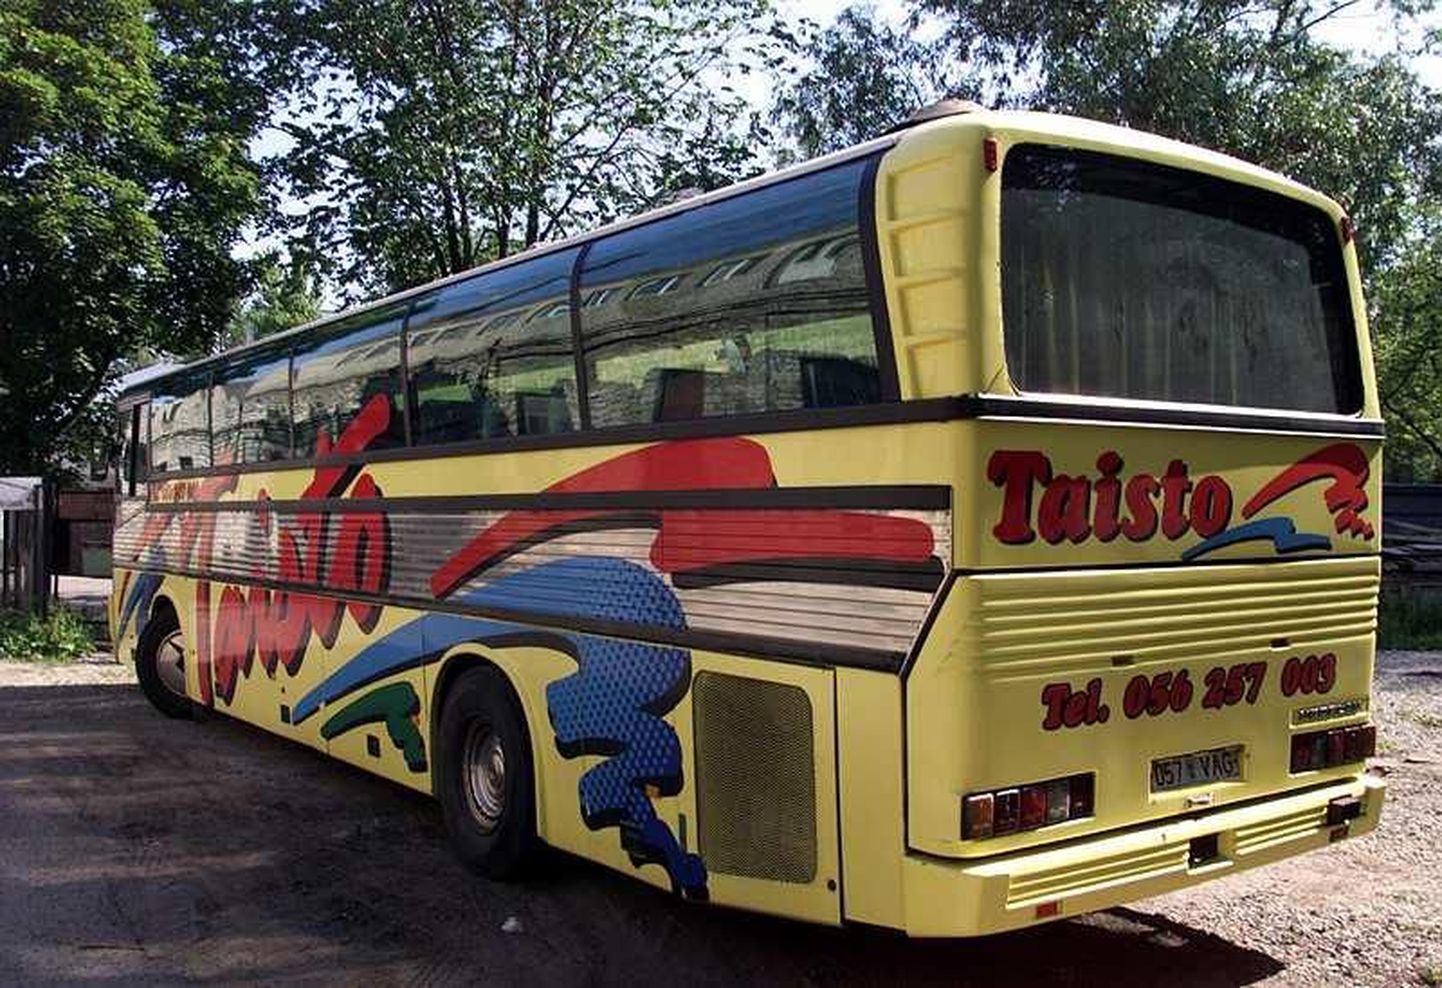 Автобус фирмы Taisto. Иллюстративное фото.